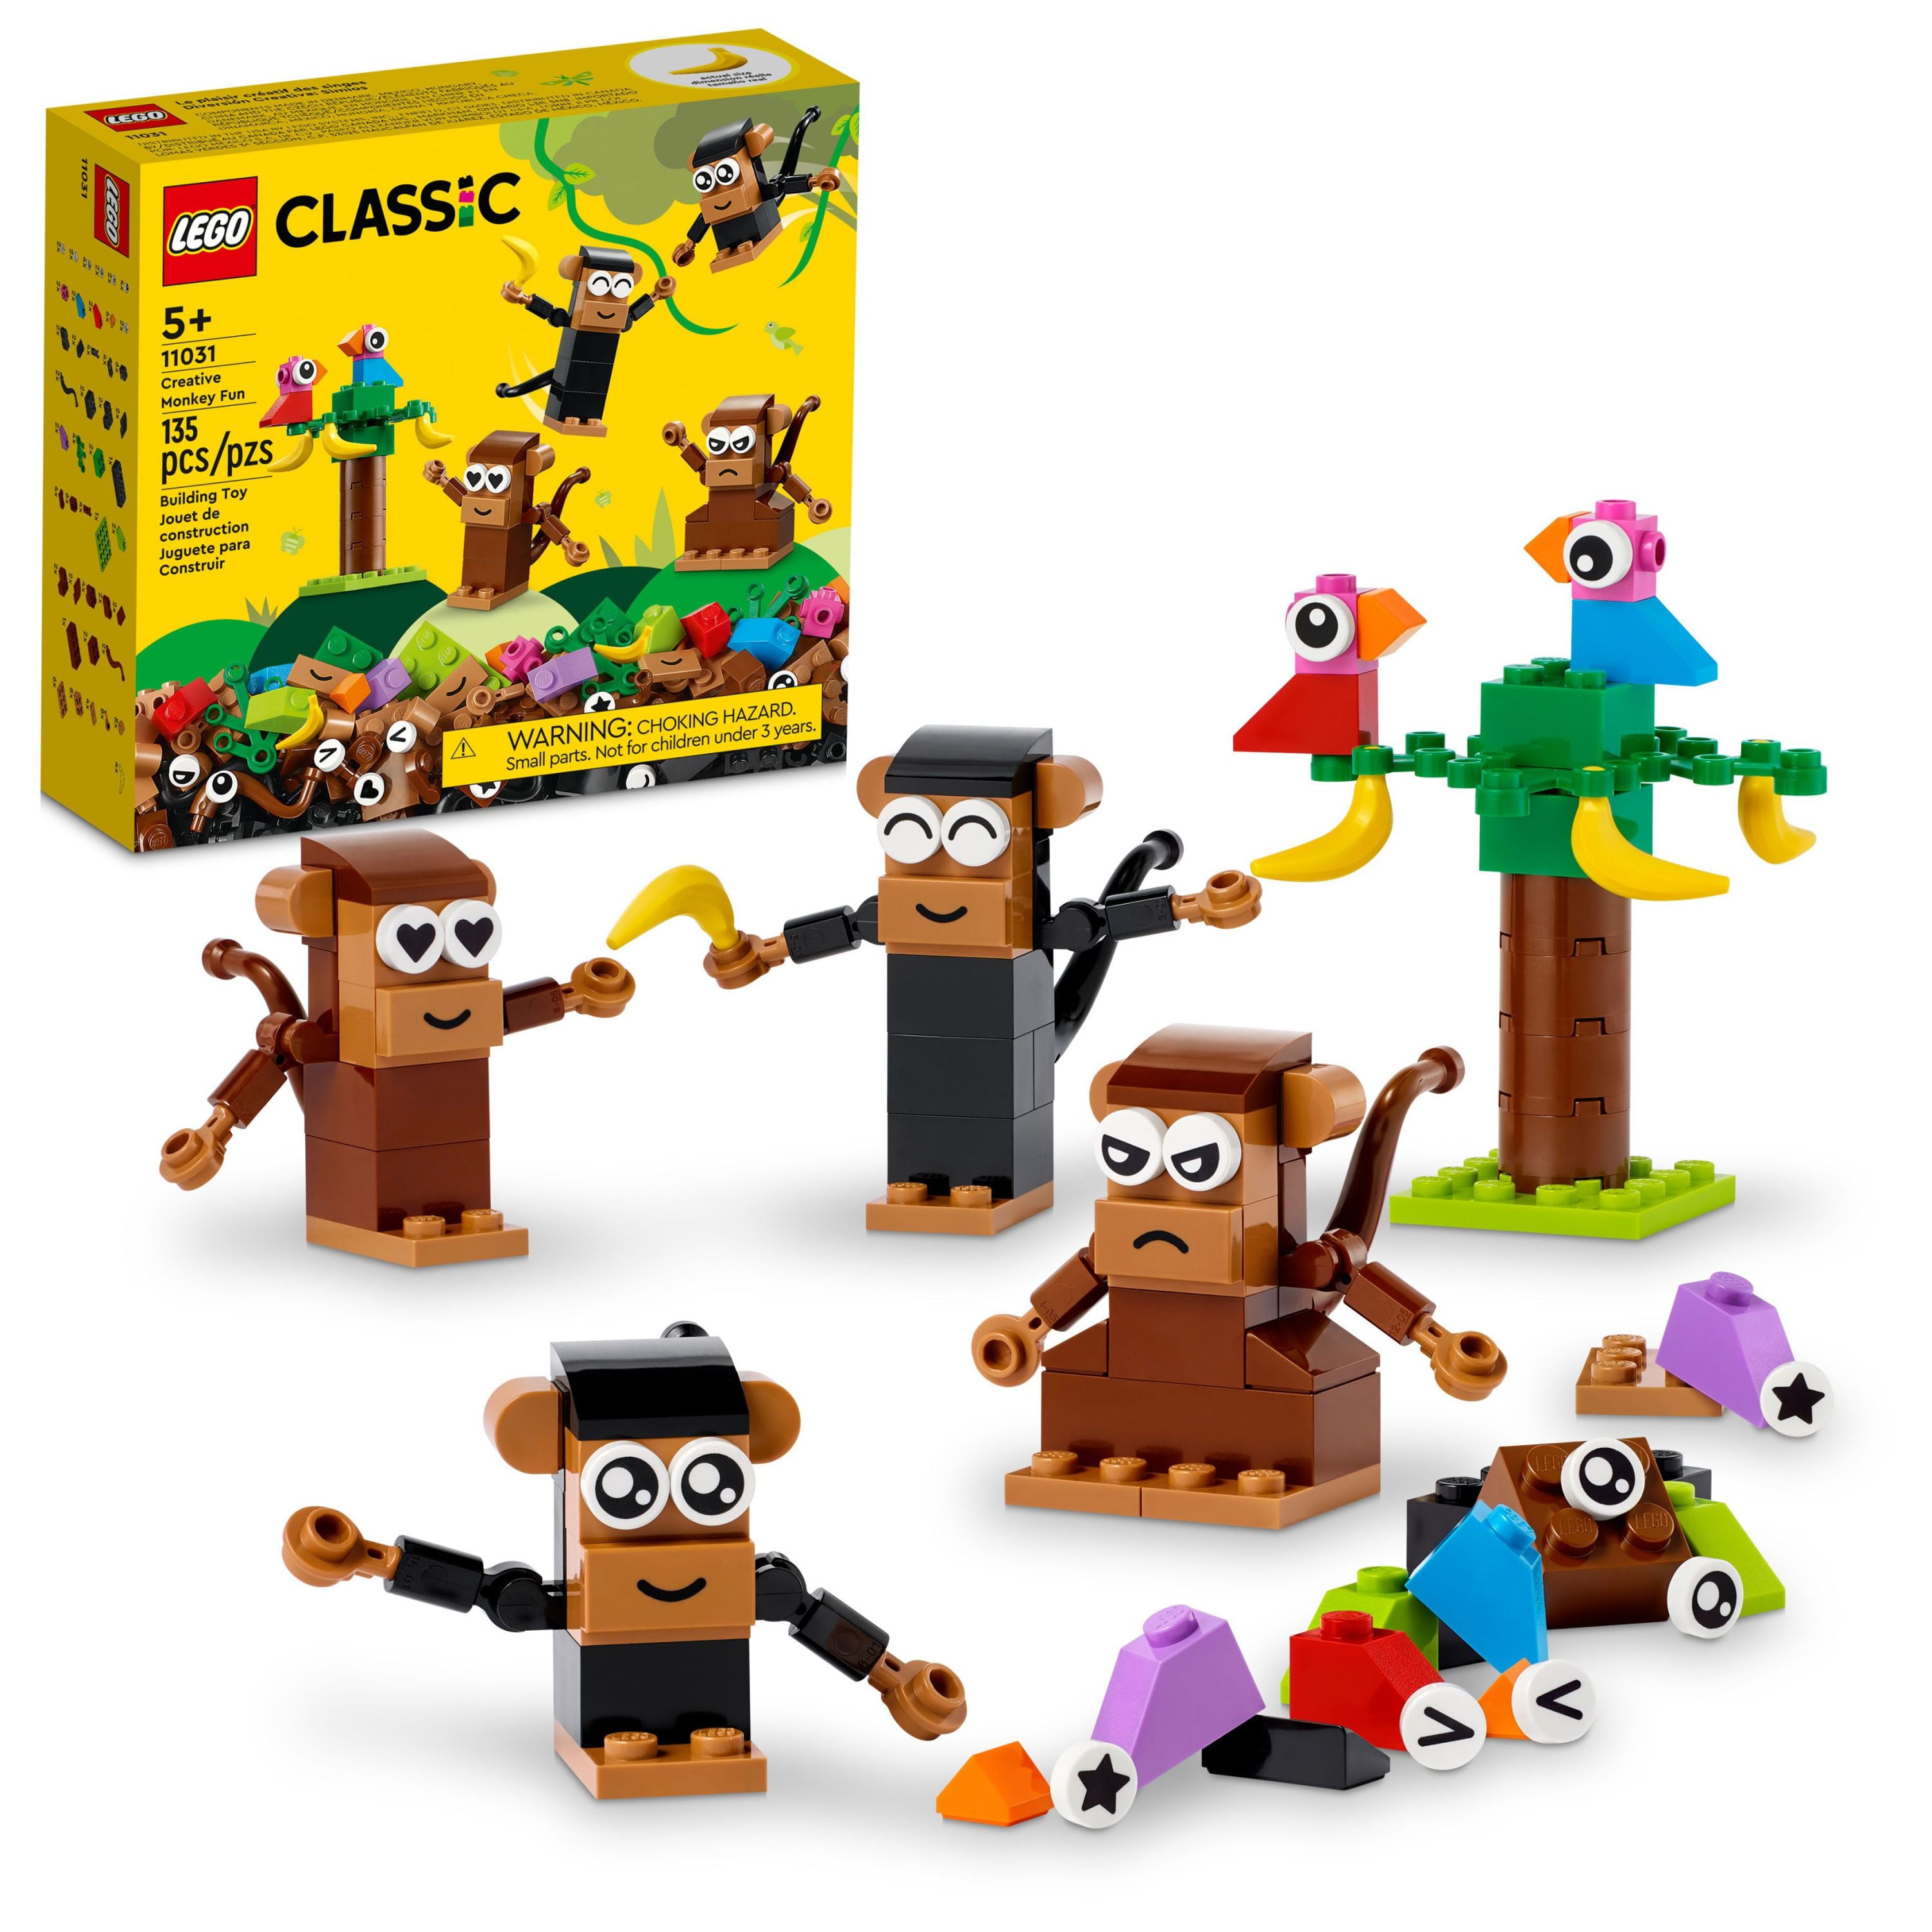 LEGO Classic Creative Monkey Fun 11031 Building Toy Set (135 Pieces) $14.95